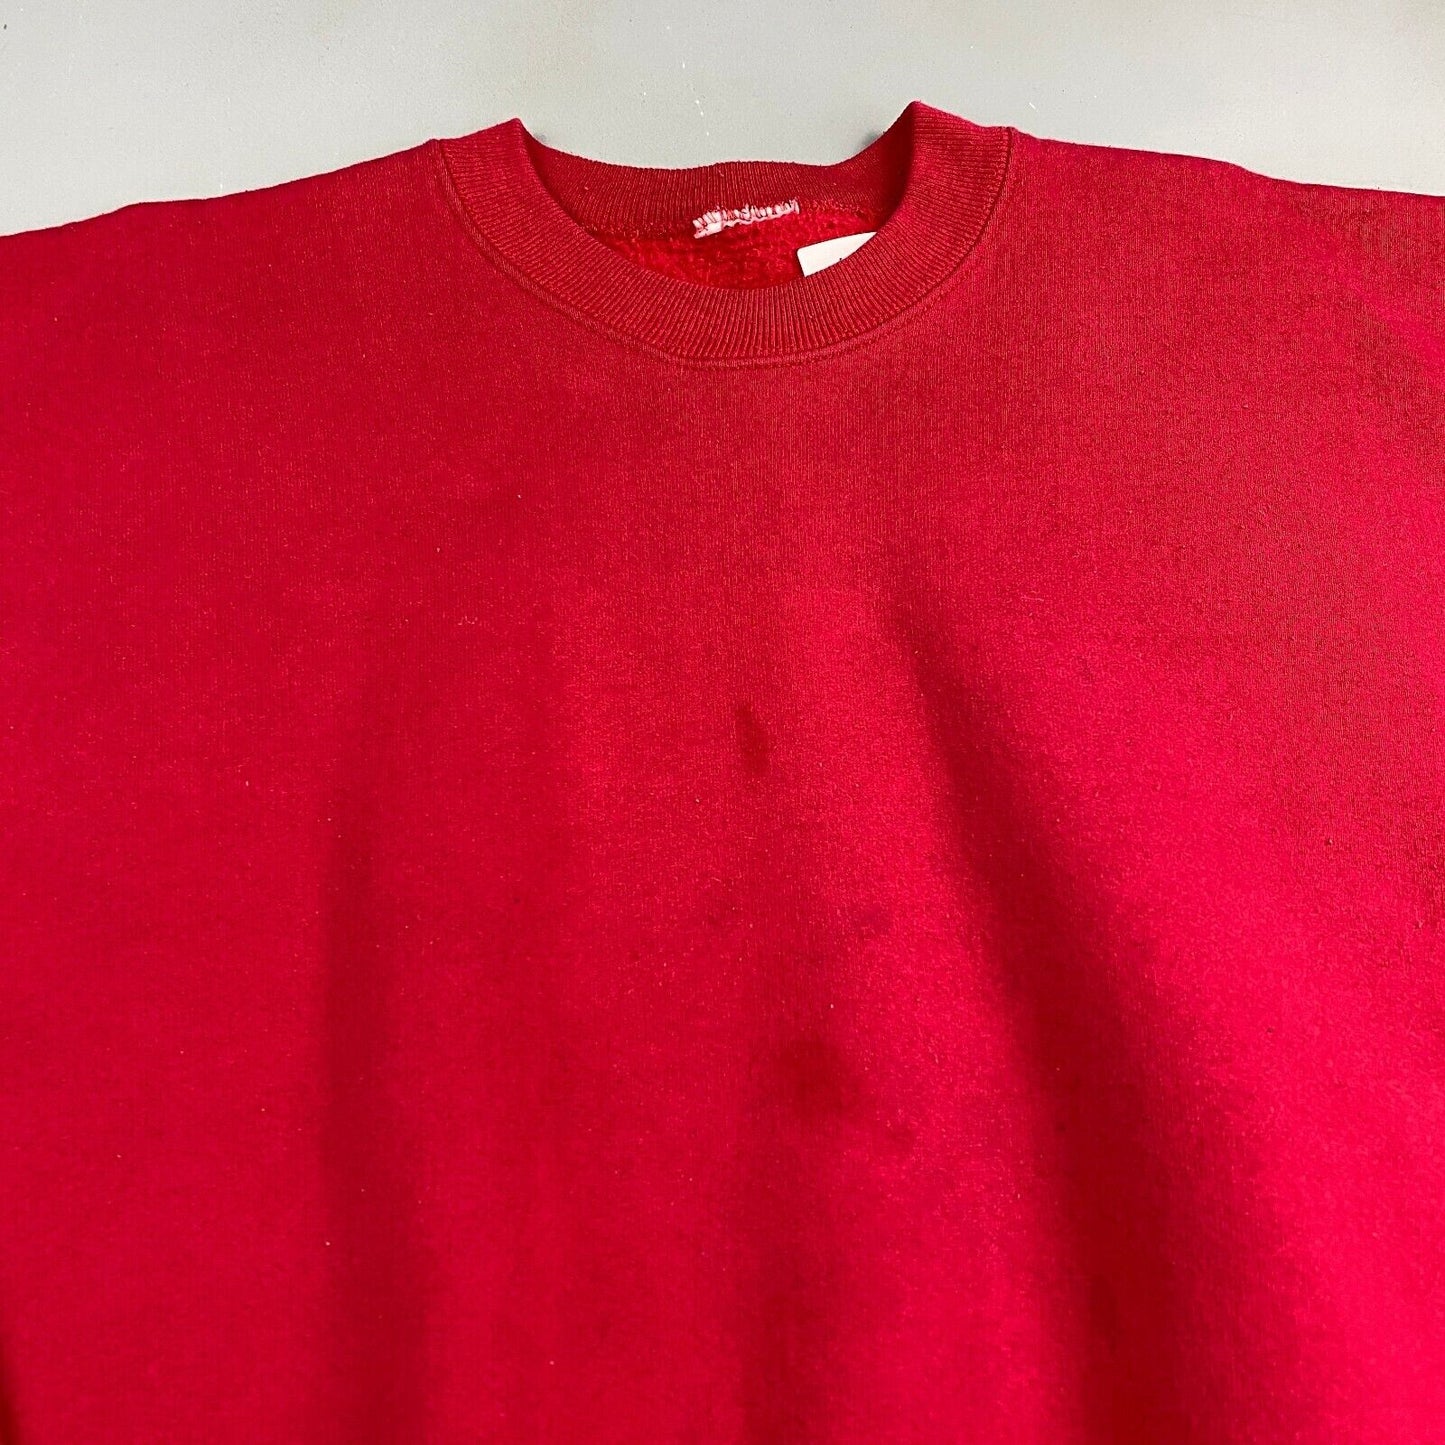 VINTAGE Blank Red Crewneck Sweater sz L-XL Mens Adult